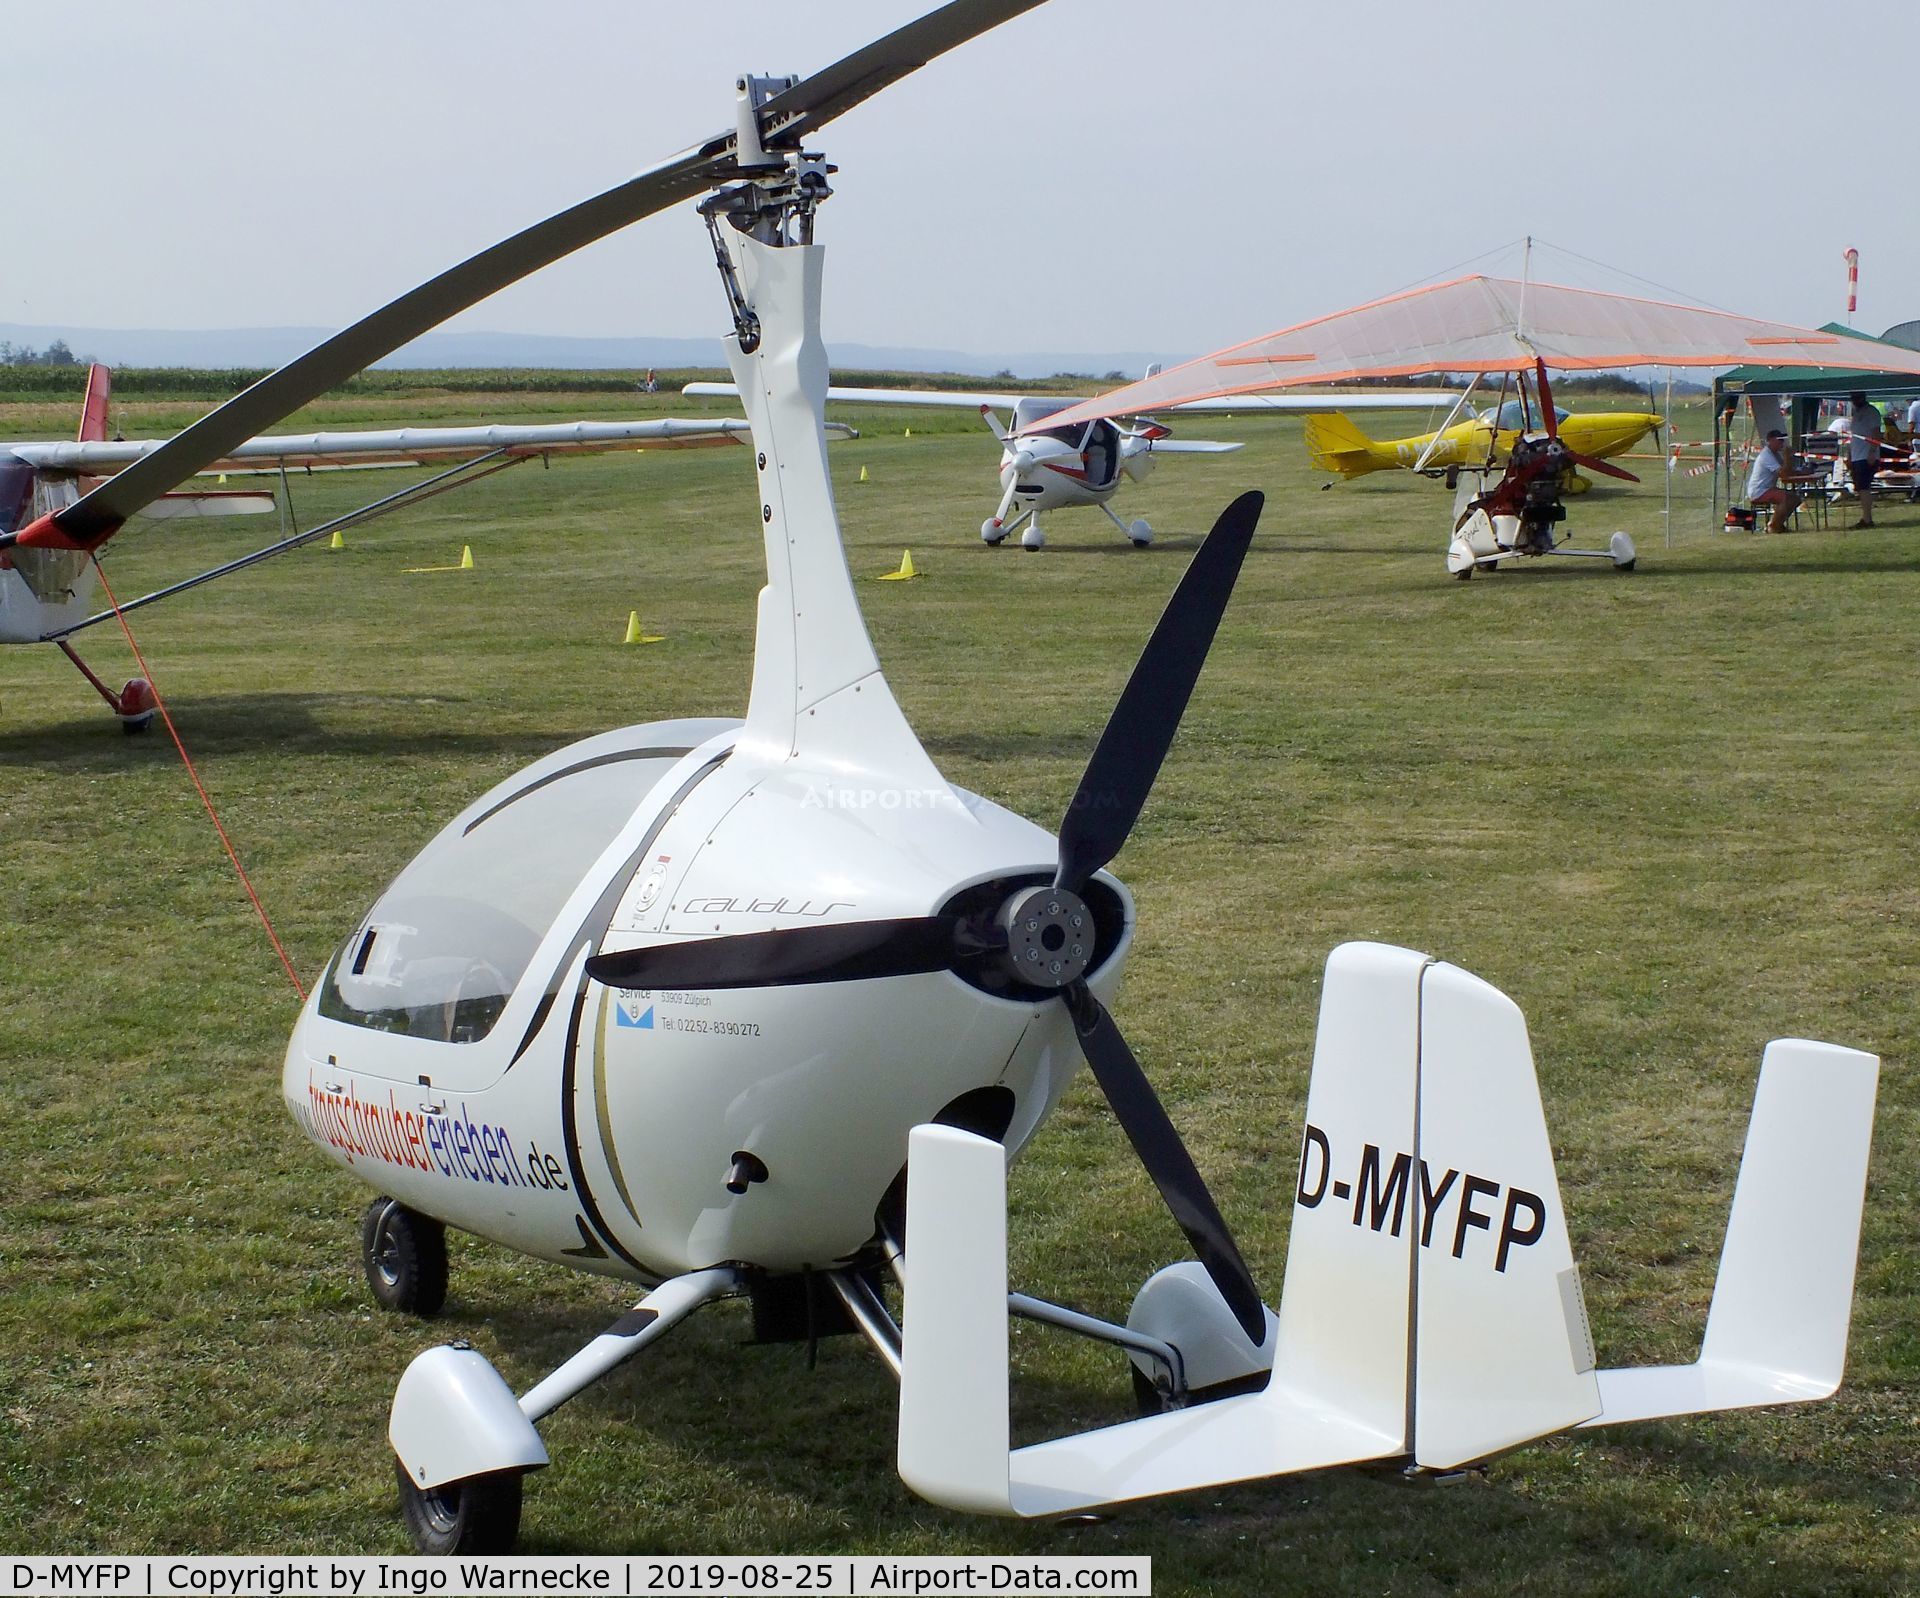 D-MYFP, AutoGyro Calidus C/N not foung D-Myfp, AutoGyro Calidus at the 2019 Flugplatz-Wiesenfest airfield display at Weilerswist-Müggenhausen ultralight airfield